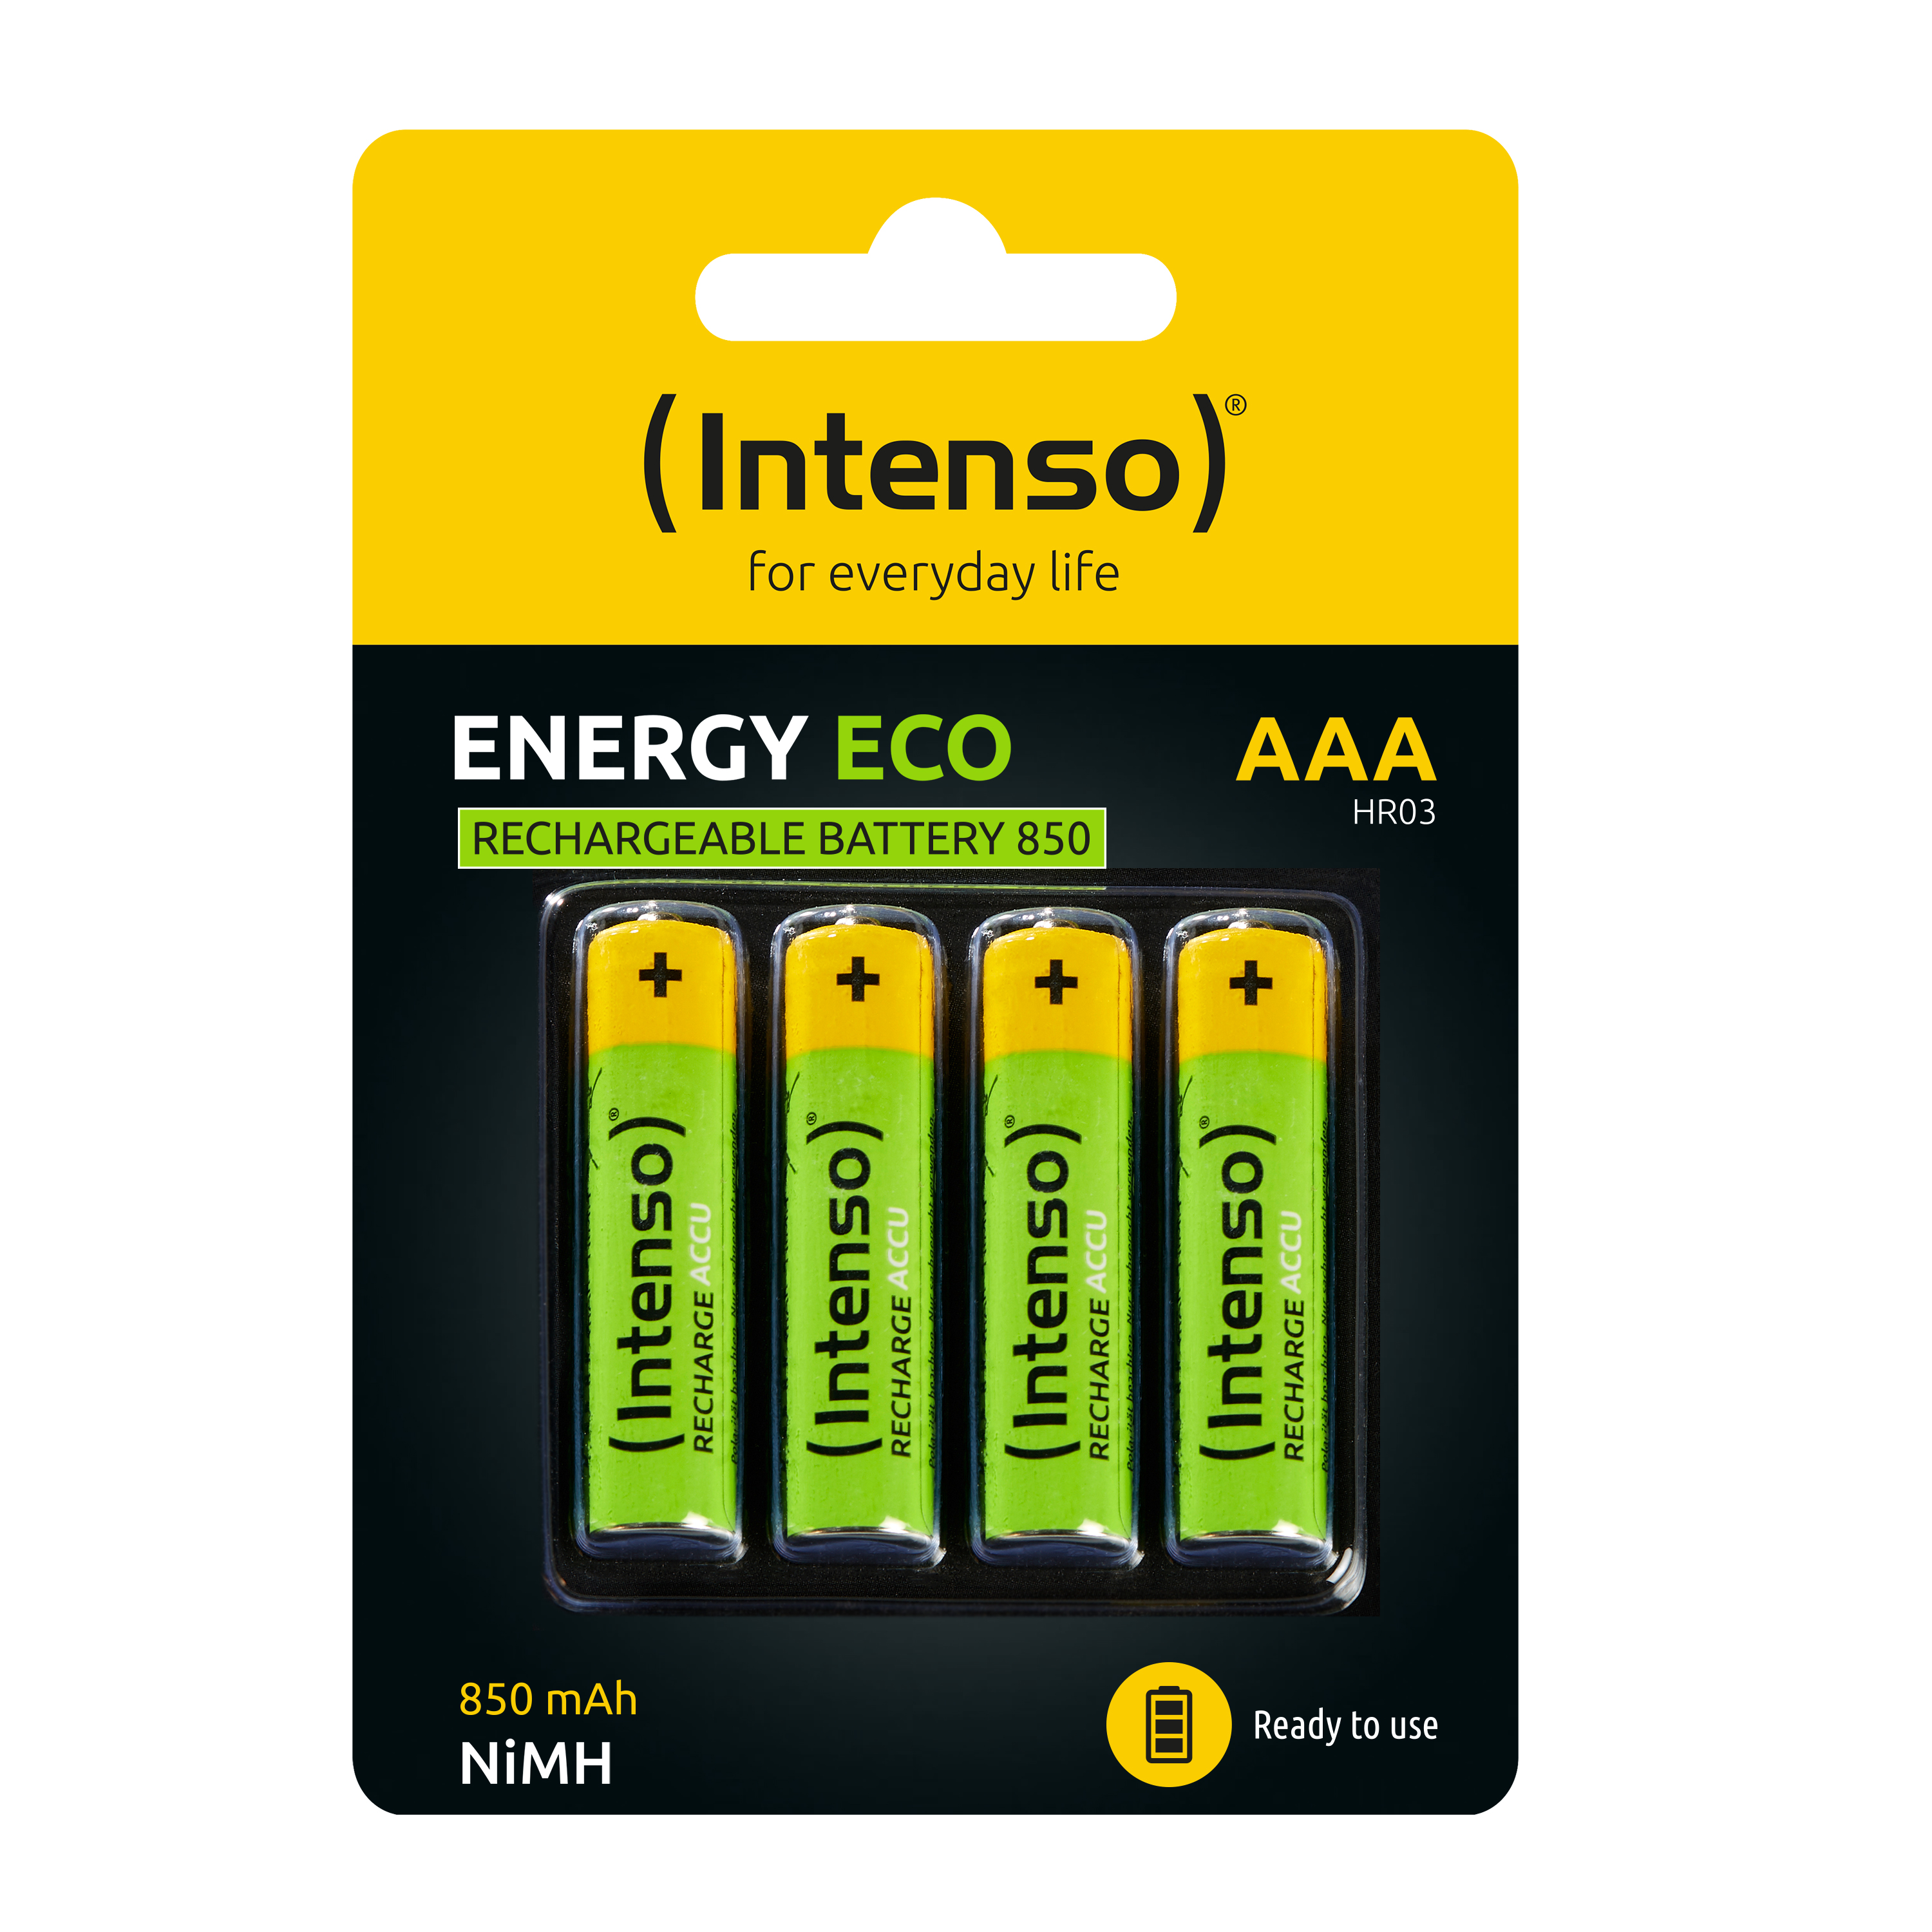 INTENSO Energy Eco Accu 850 (Nickel-Metallhydrid) AAA HR03 Batterie, Wiederaufladbare HR03, 4er 850 NiMH mAh AAA, Batterie mAh Pack Mignon